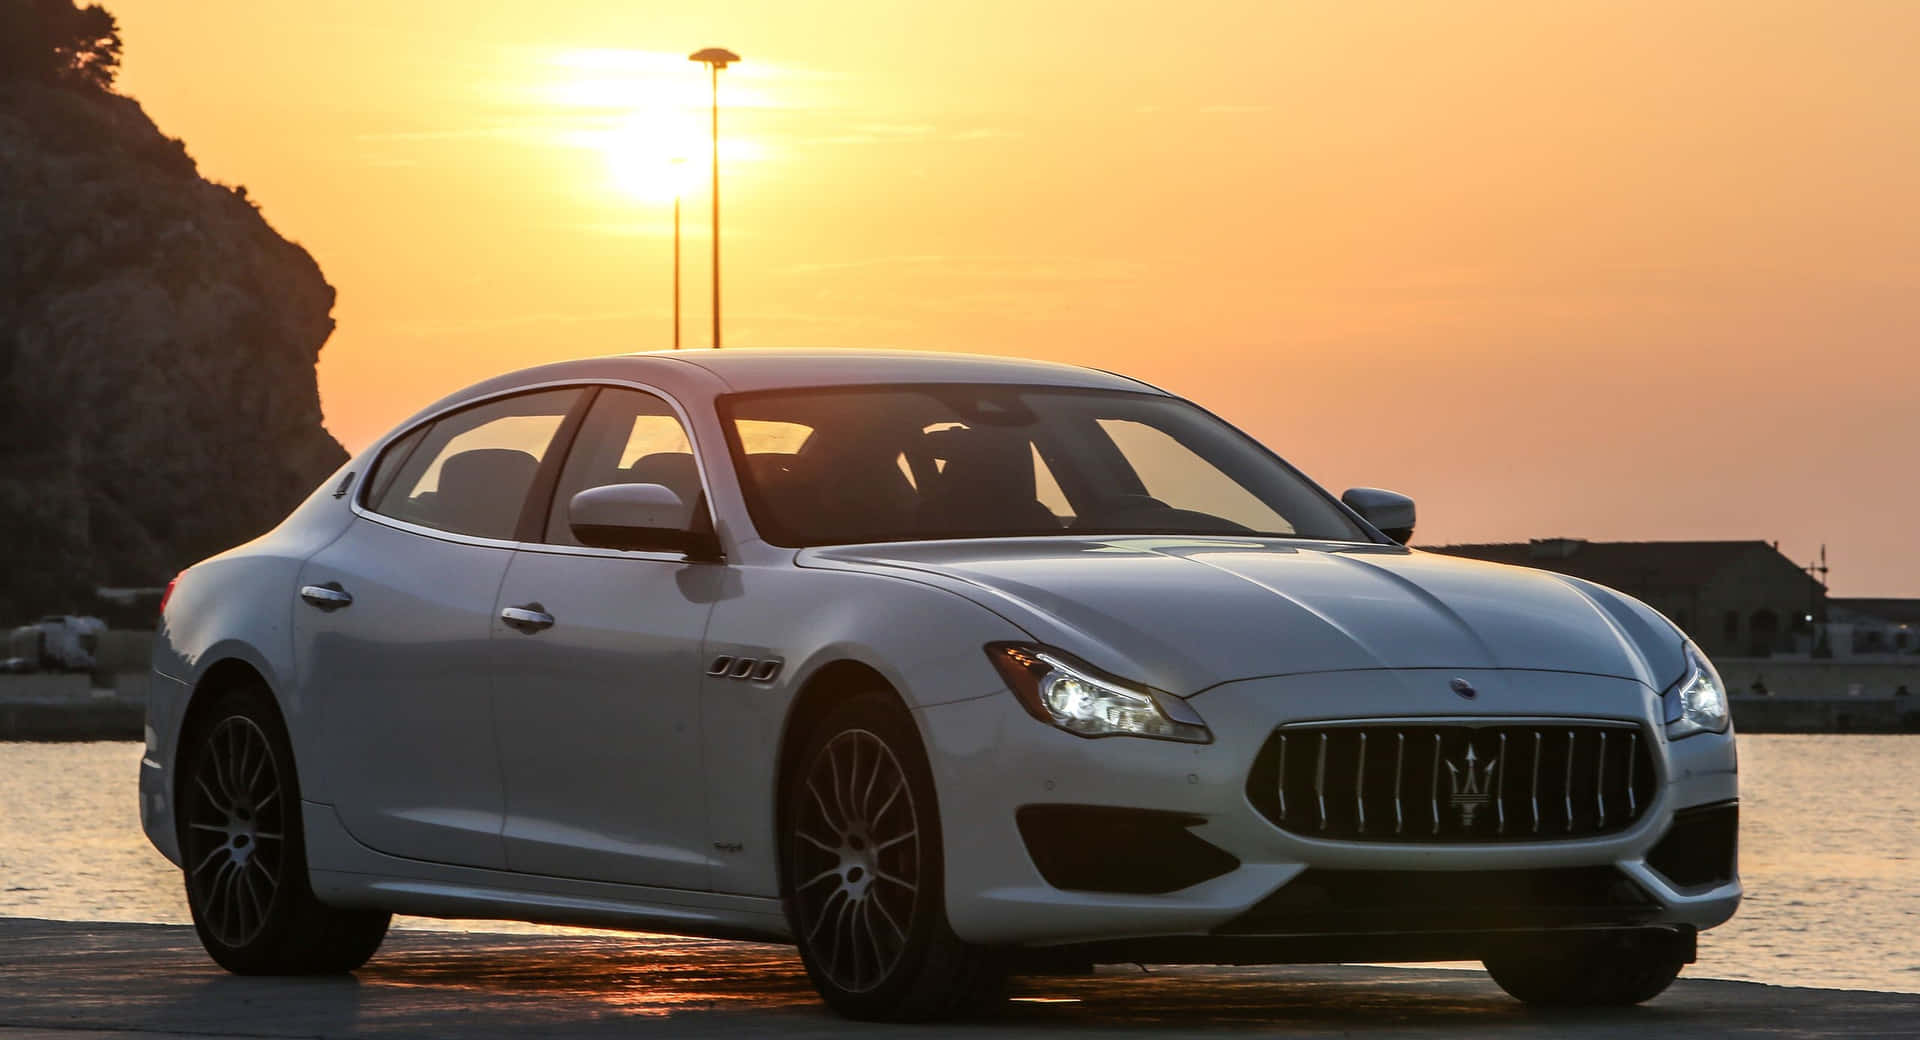 High-performance Maserati Quattroporte In Majestic Atmosphere Wallpaper